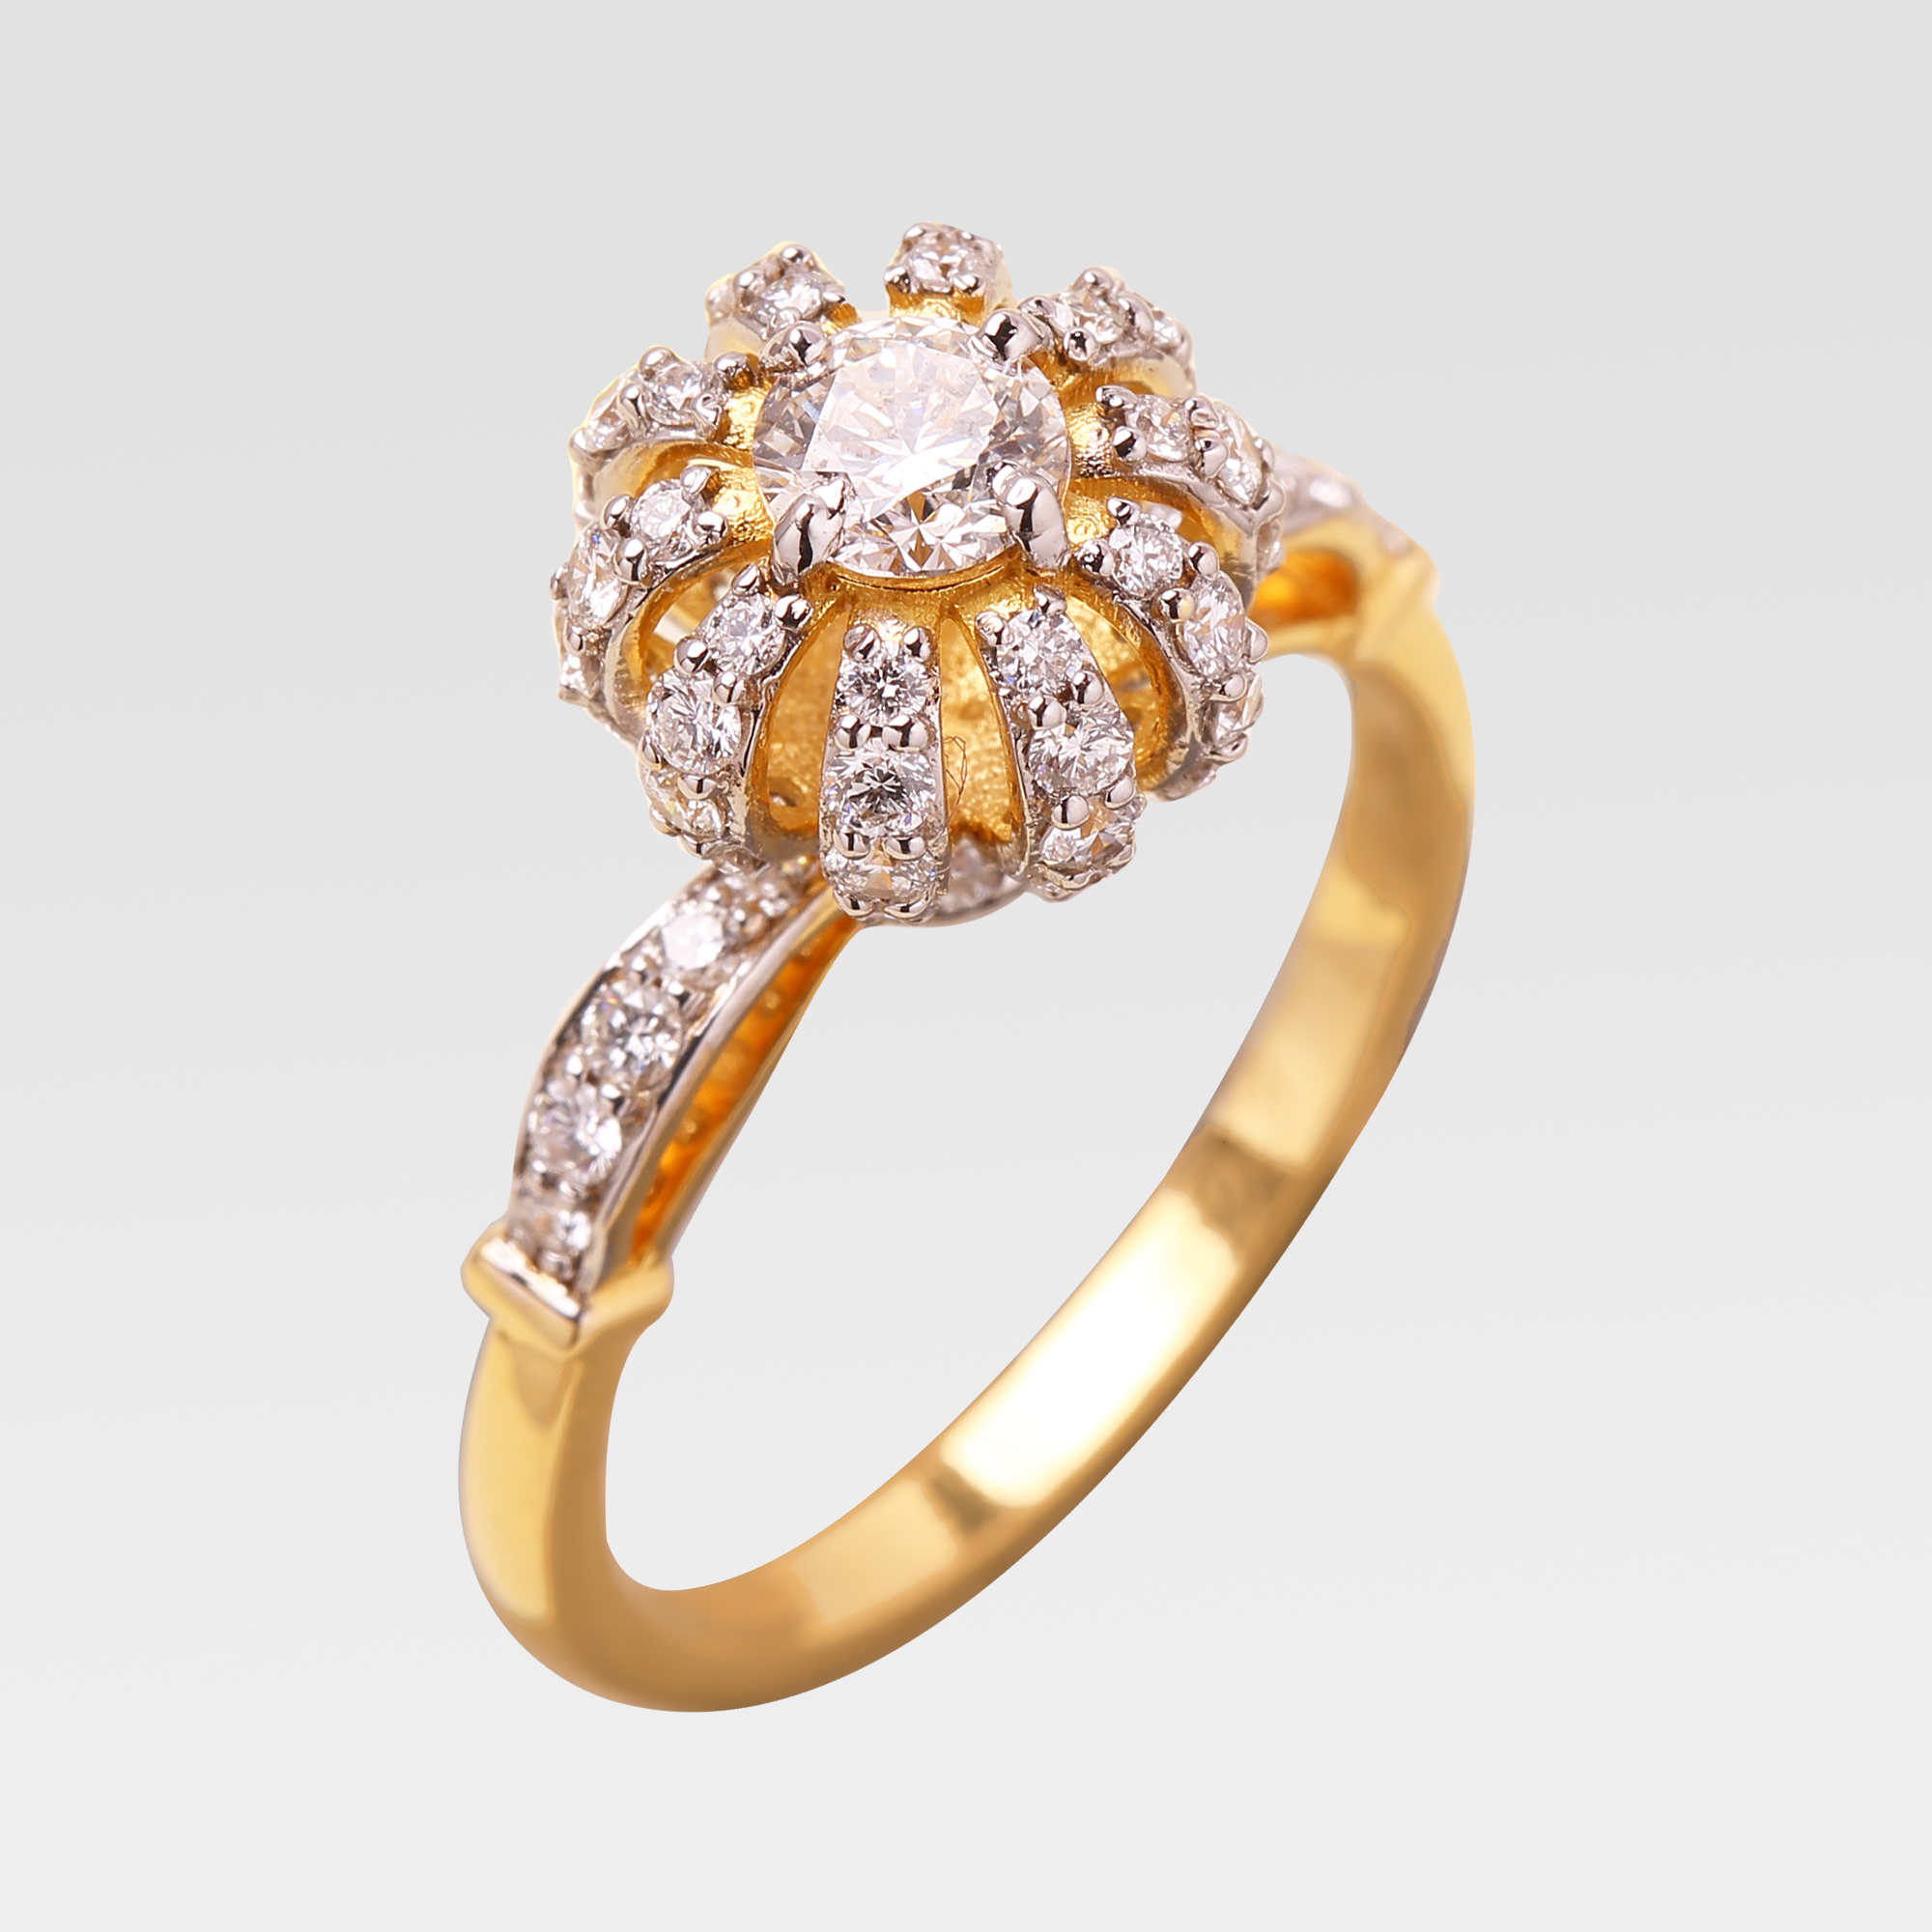 Captivating diamond ring